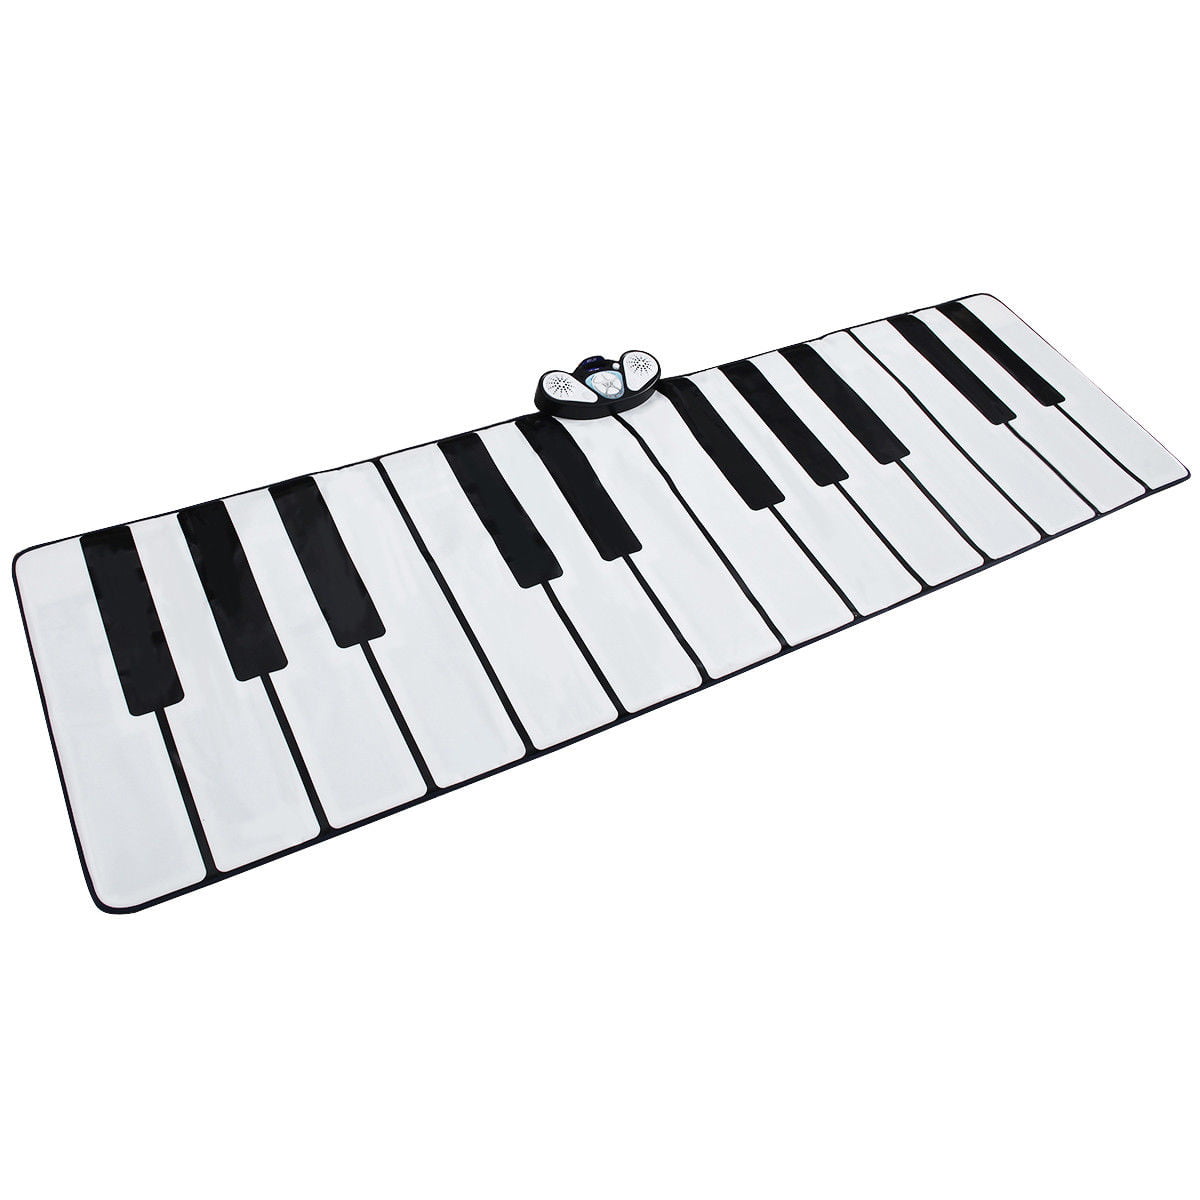 Gigantic Piano Keyboard Play Mat 24 Keys Dancing Pads with 9 Instrument Settings 